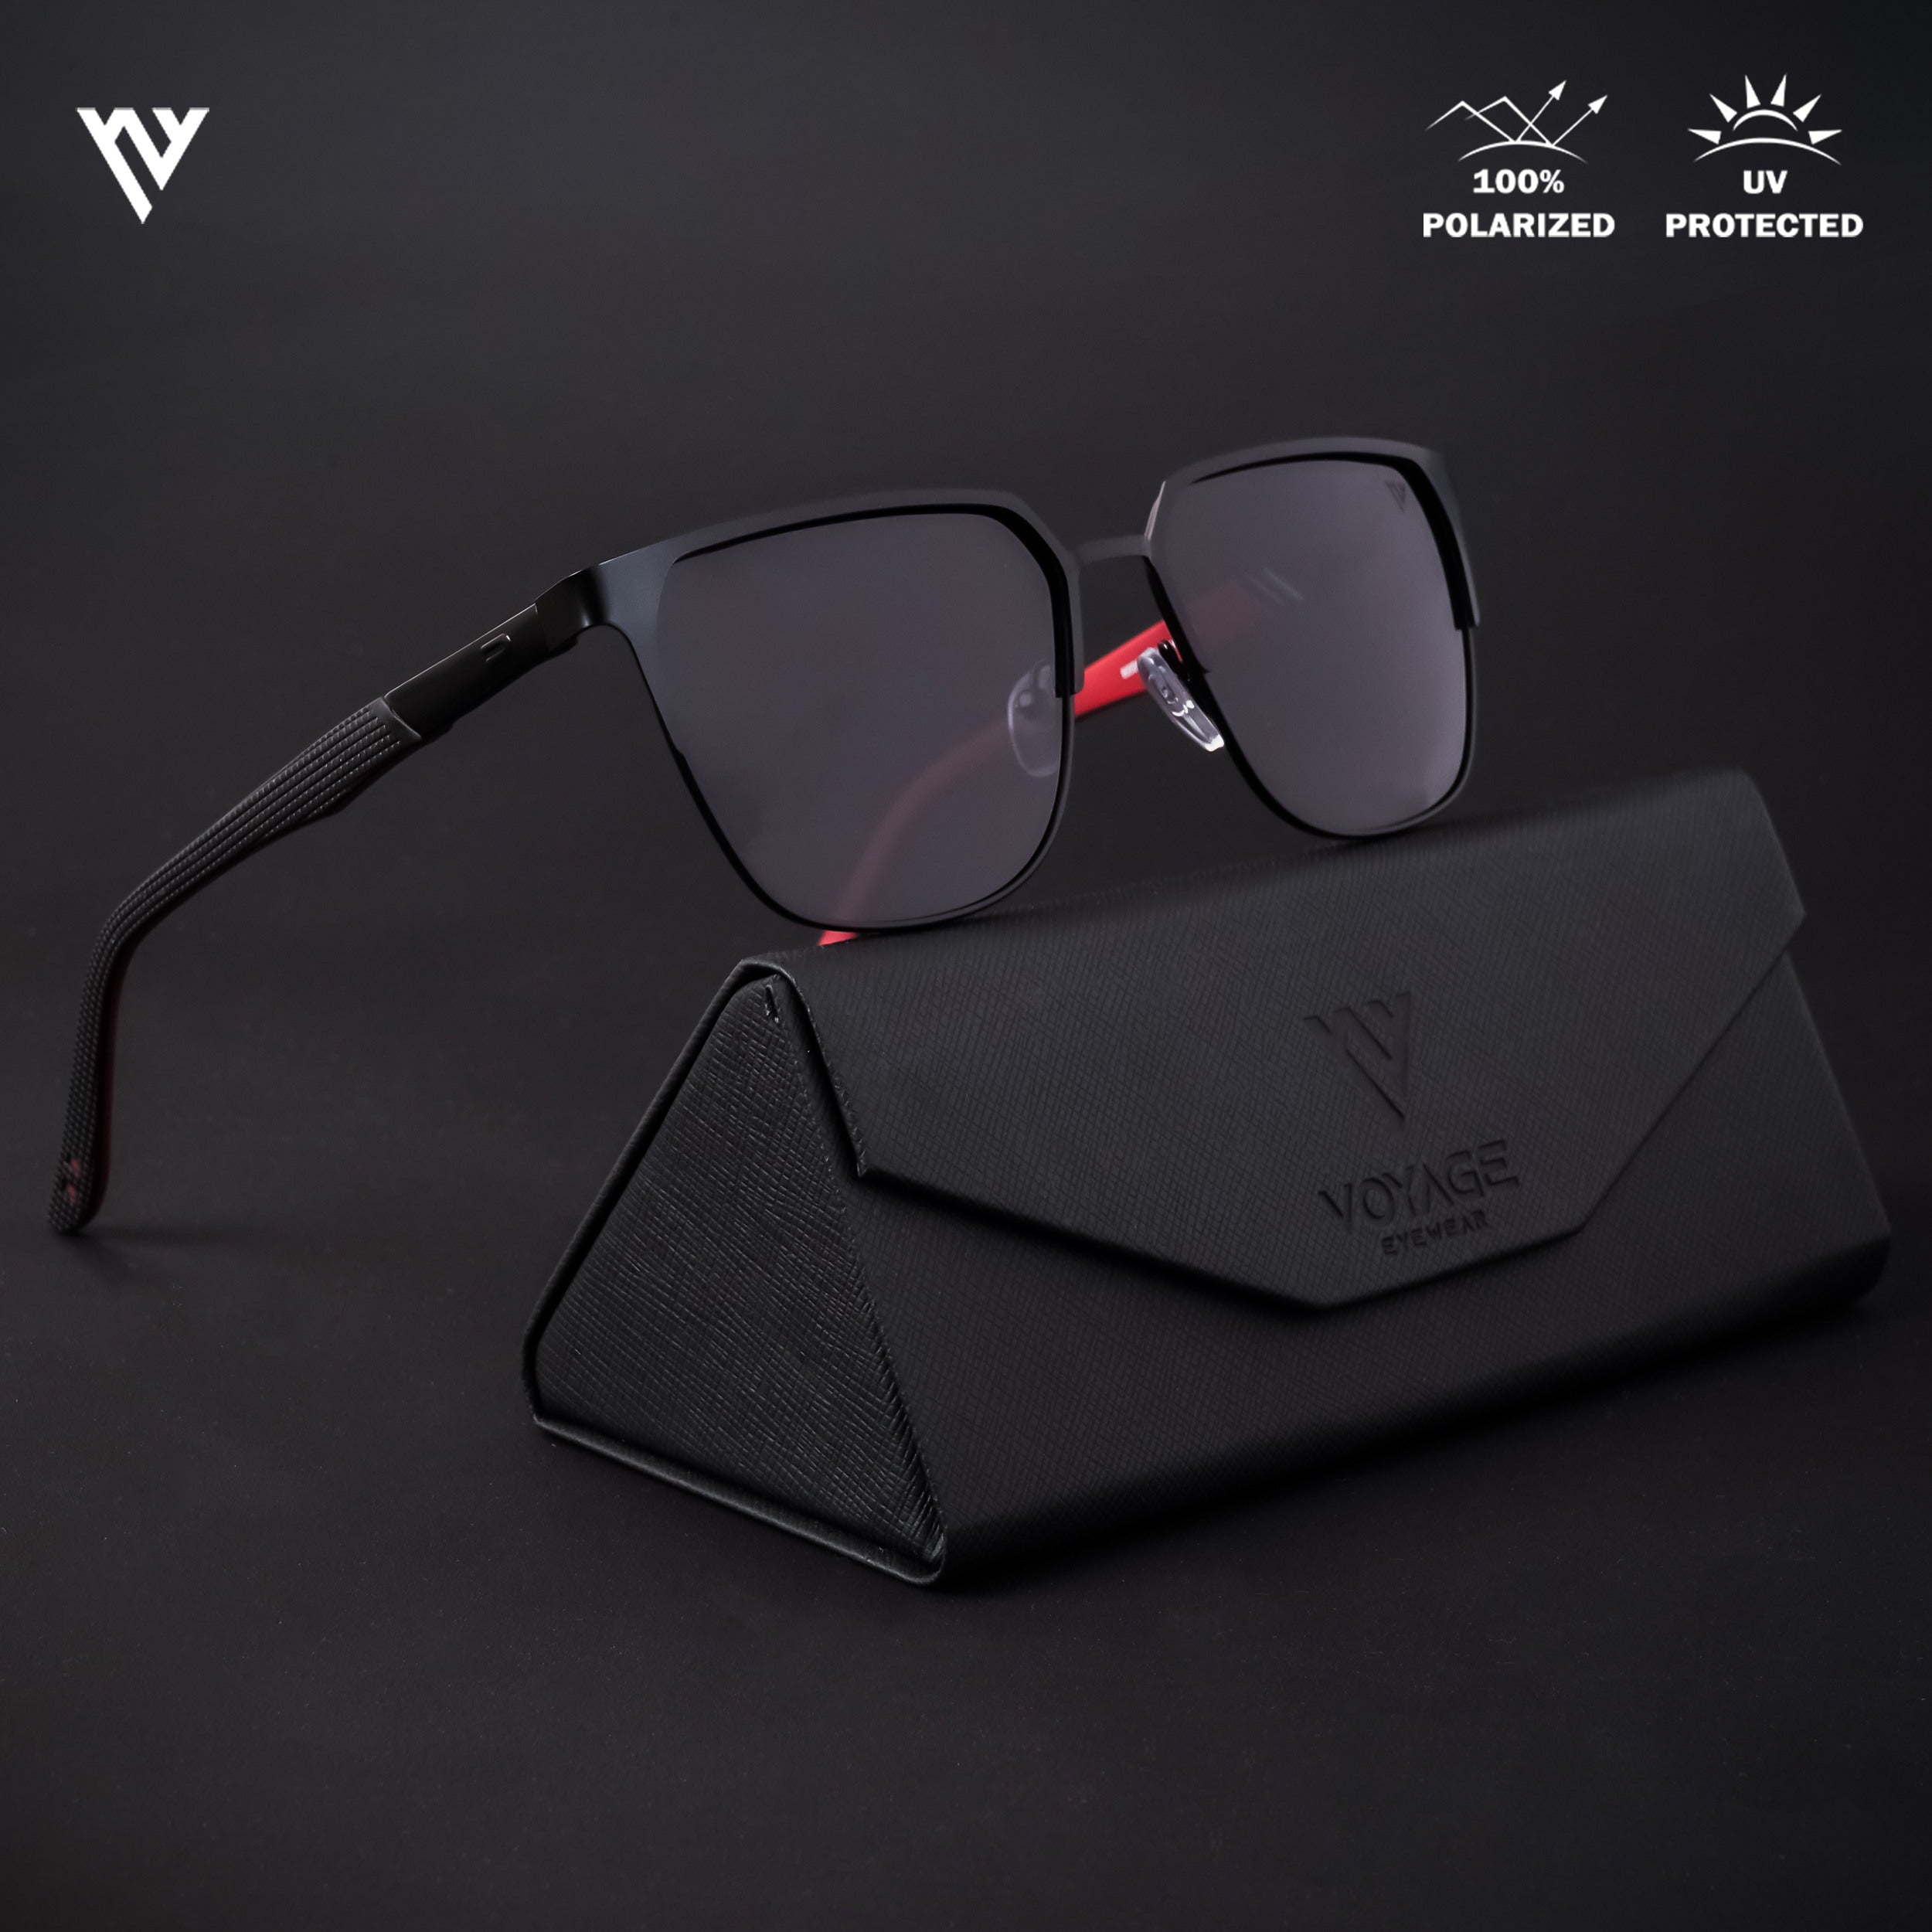 Voyage Exclusive Black Polarized Square Sunglasses for Men & Women - PMG4282